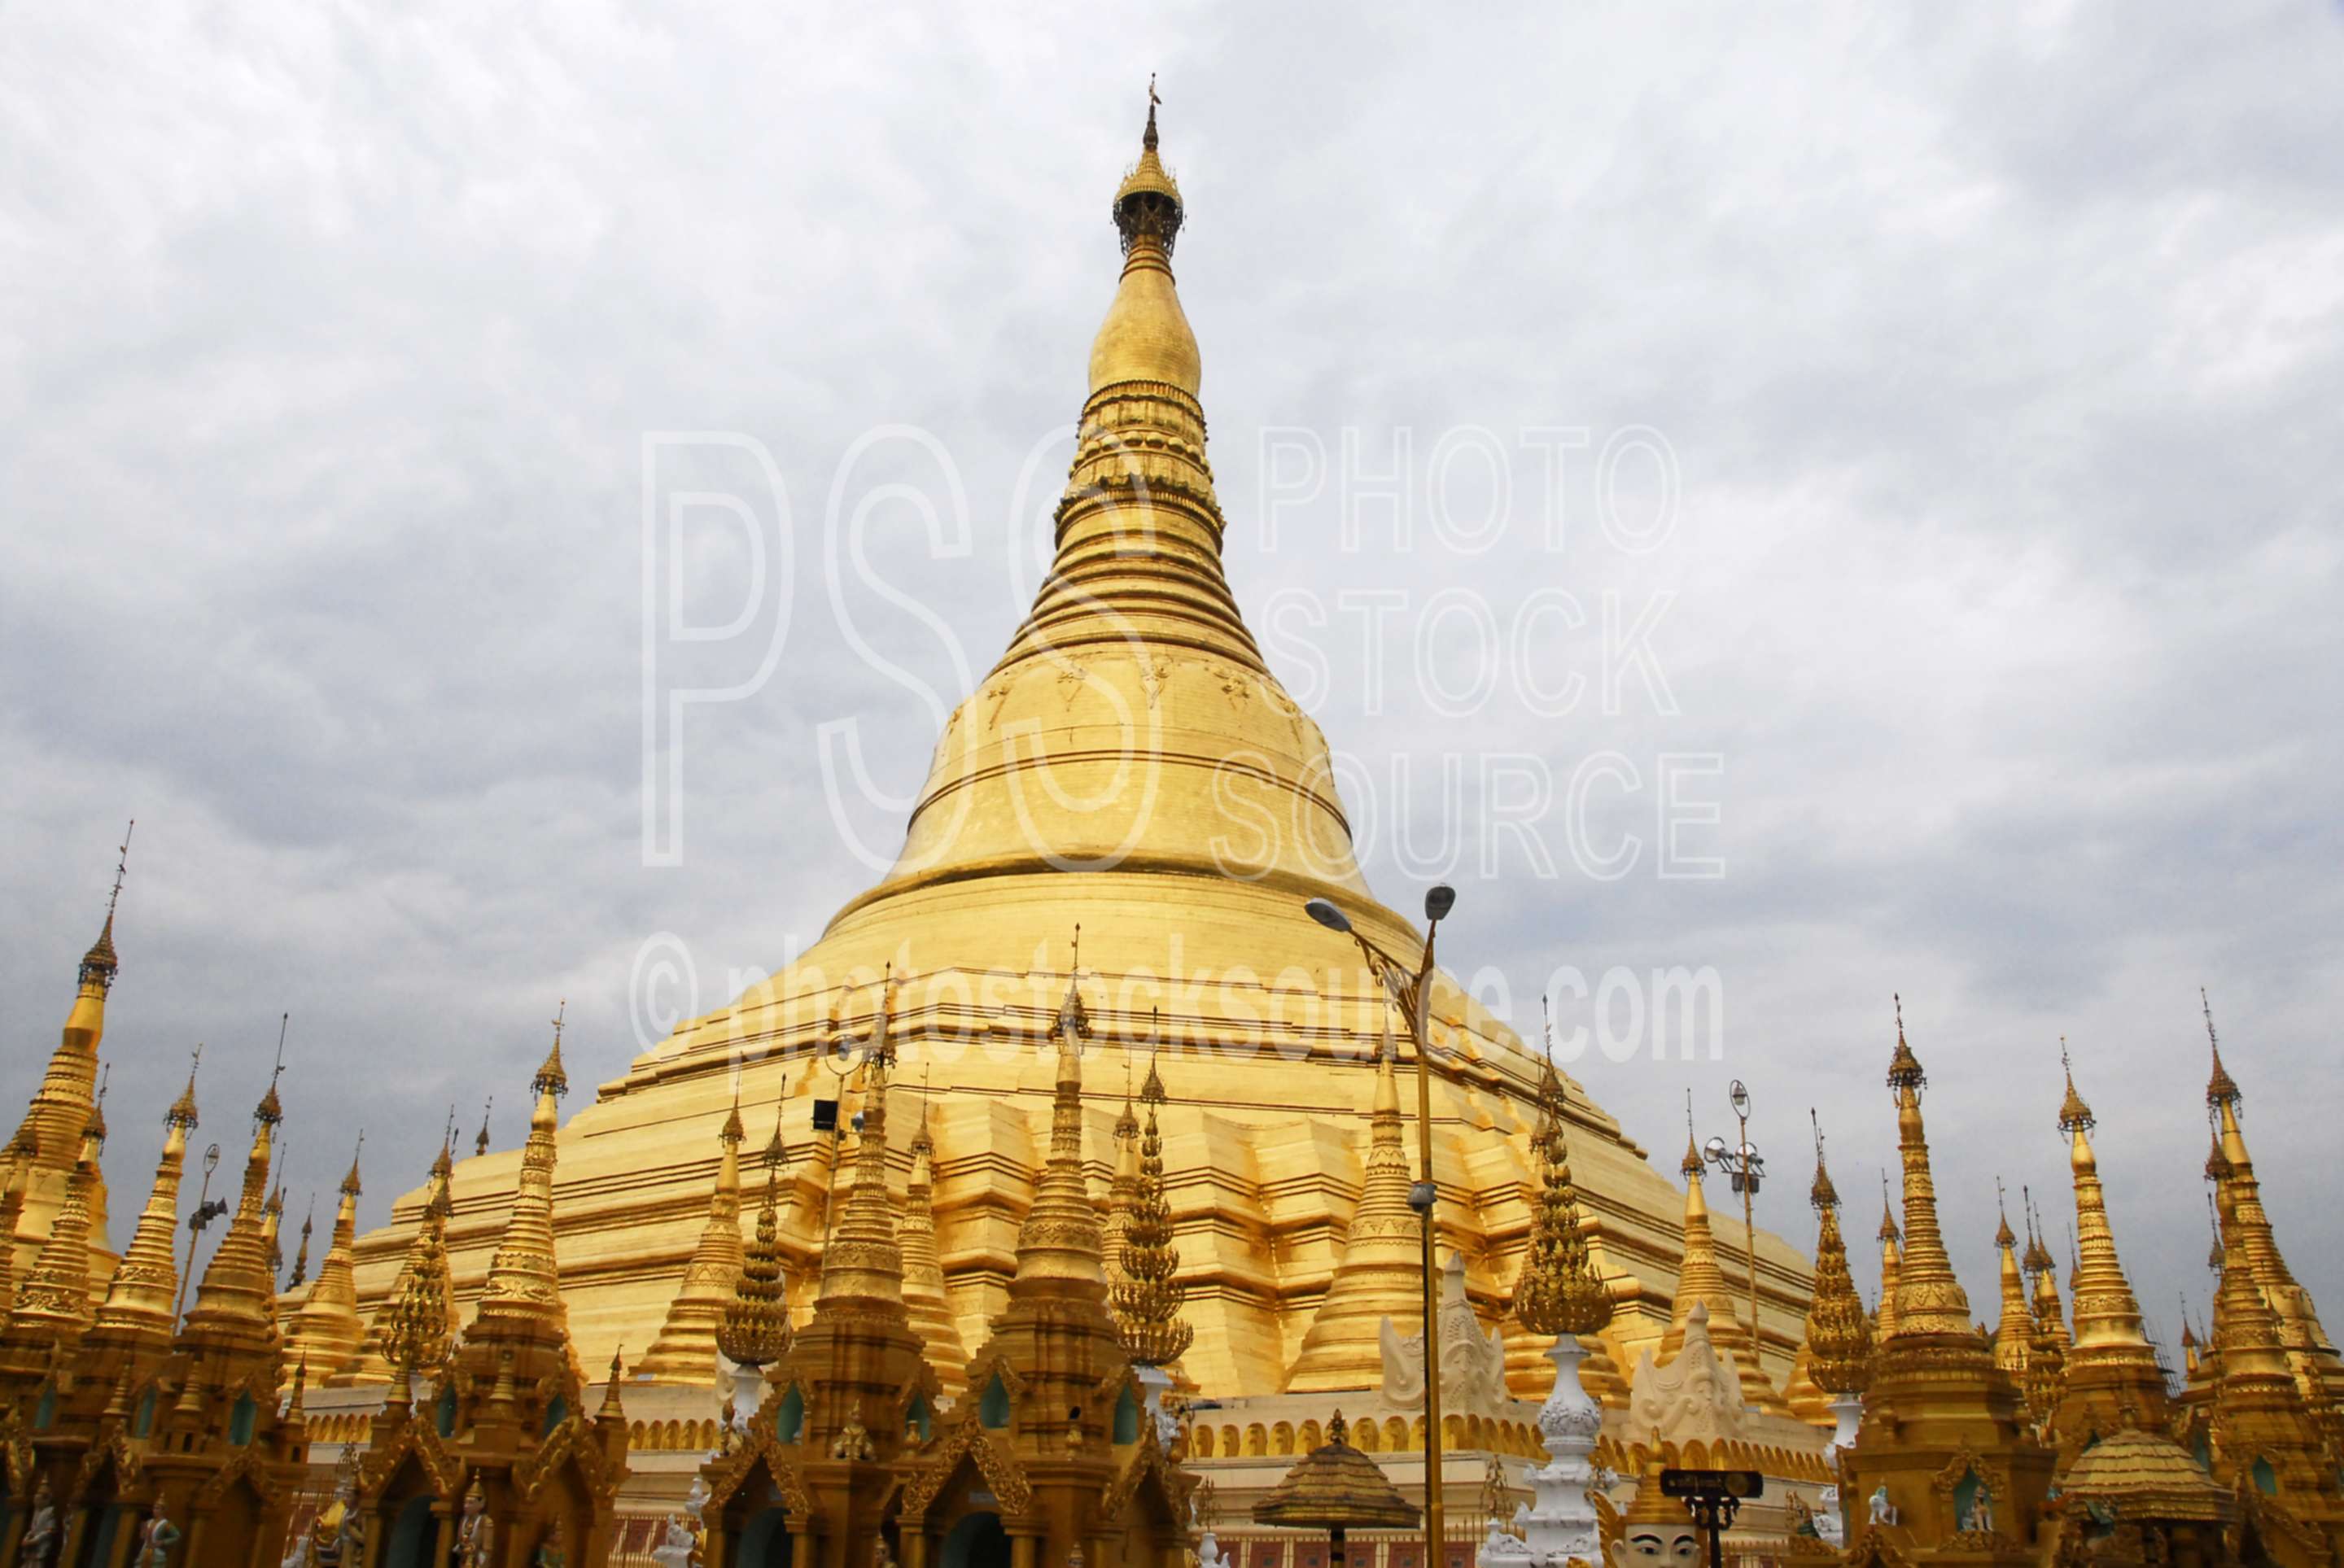 Shwedagon Pagoda Stupa,myanmar,buddhism,paya,pagoda,shwedagon zedi daw,zedi,golden pagoda,gold,golden,gold leaf,stupa,shrine,rangoon,rangon,yangoon